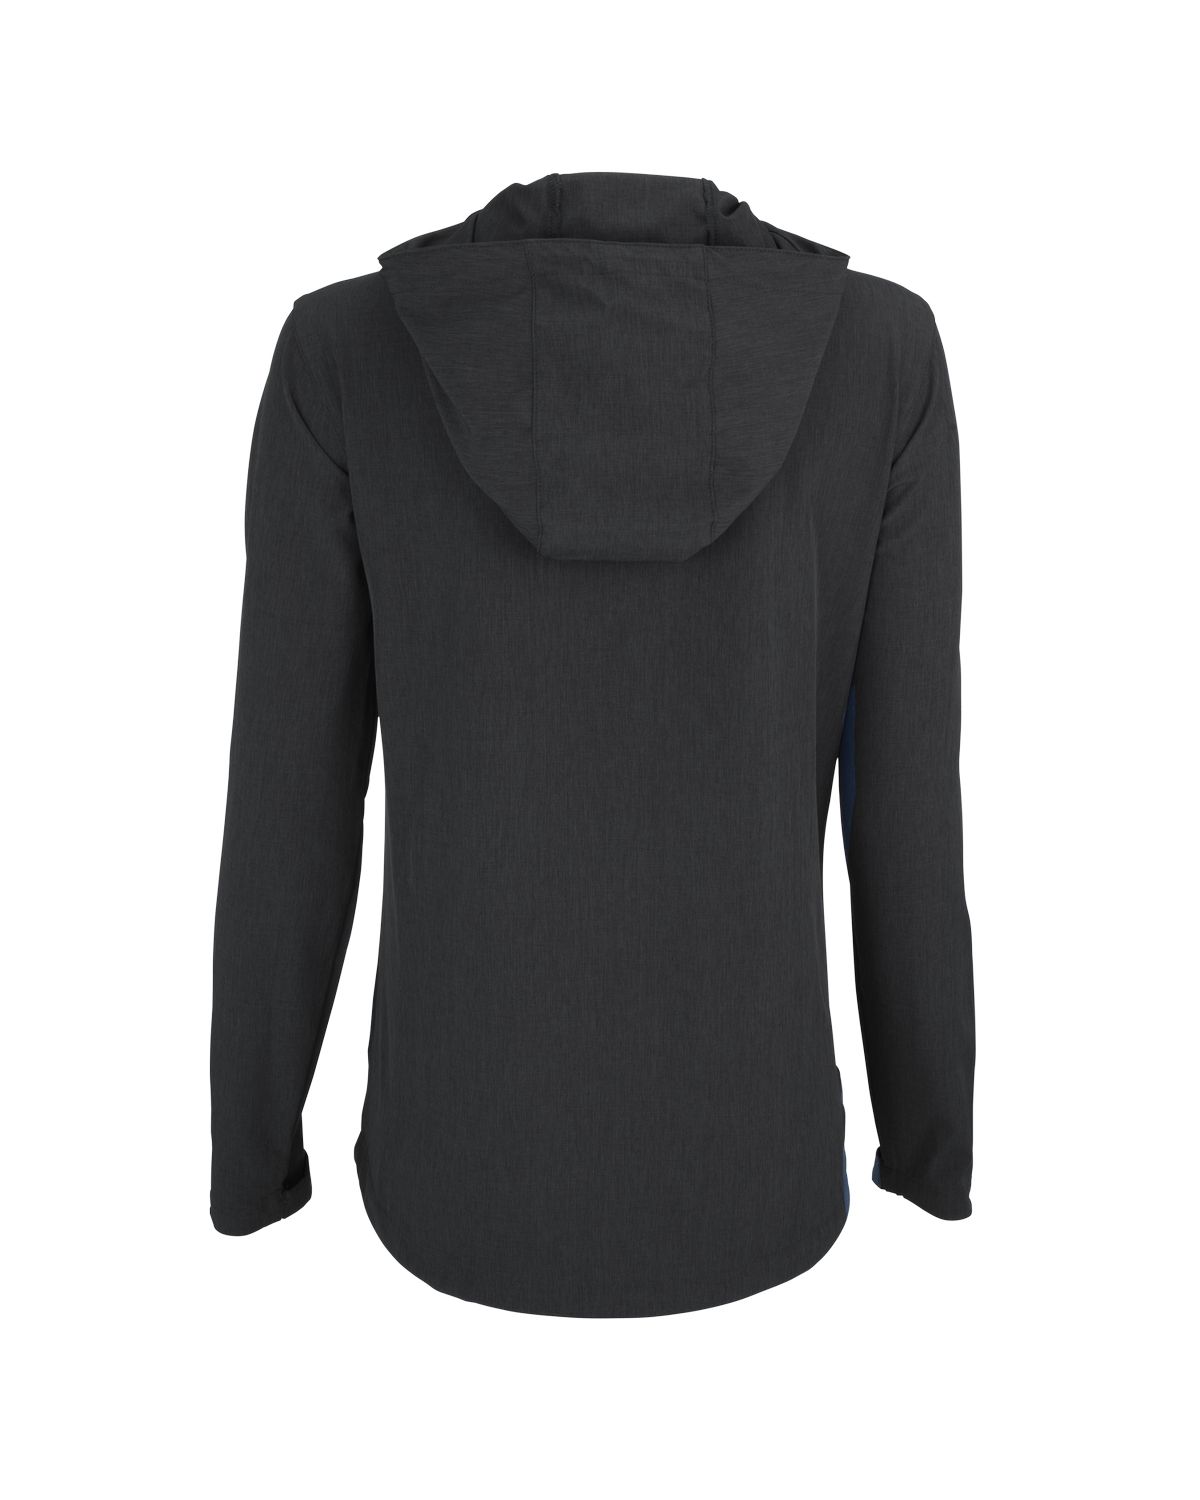 'Vantage 6106 Women's Pullover Stretch Anorak'